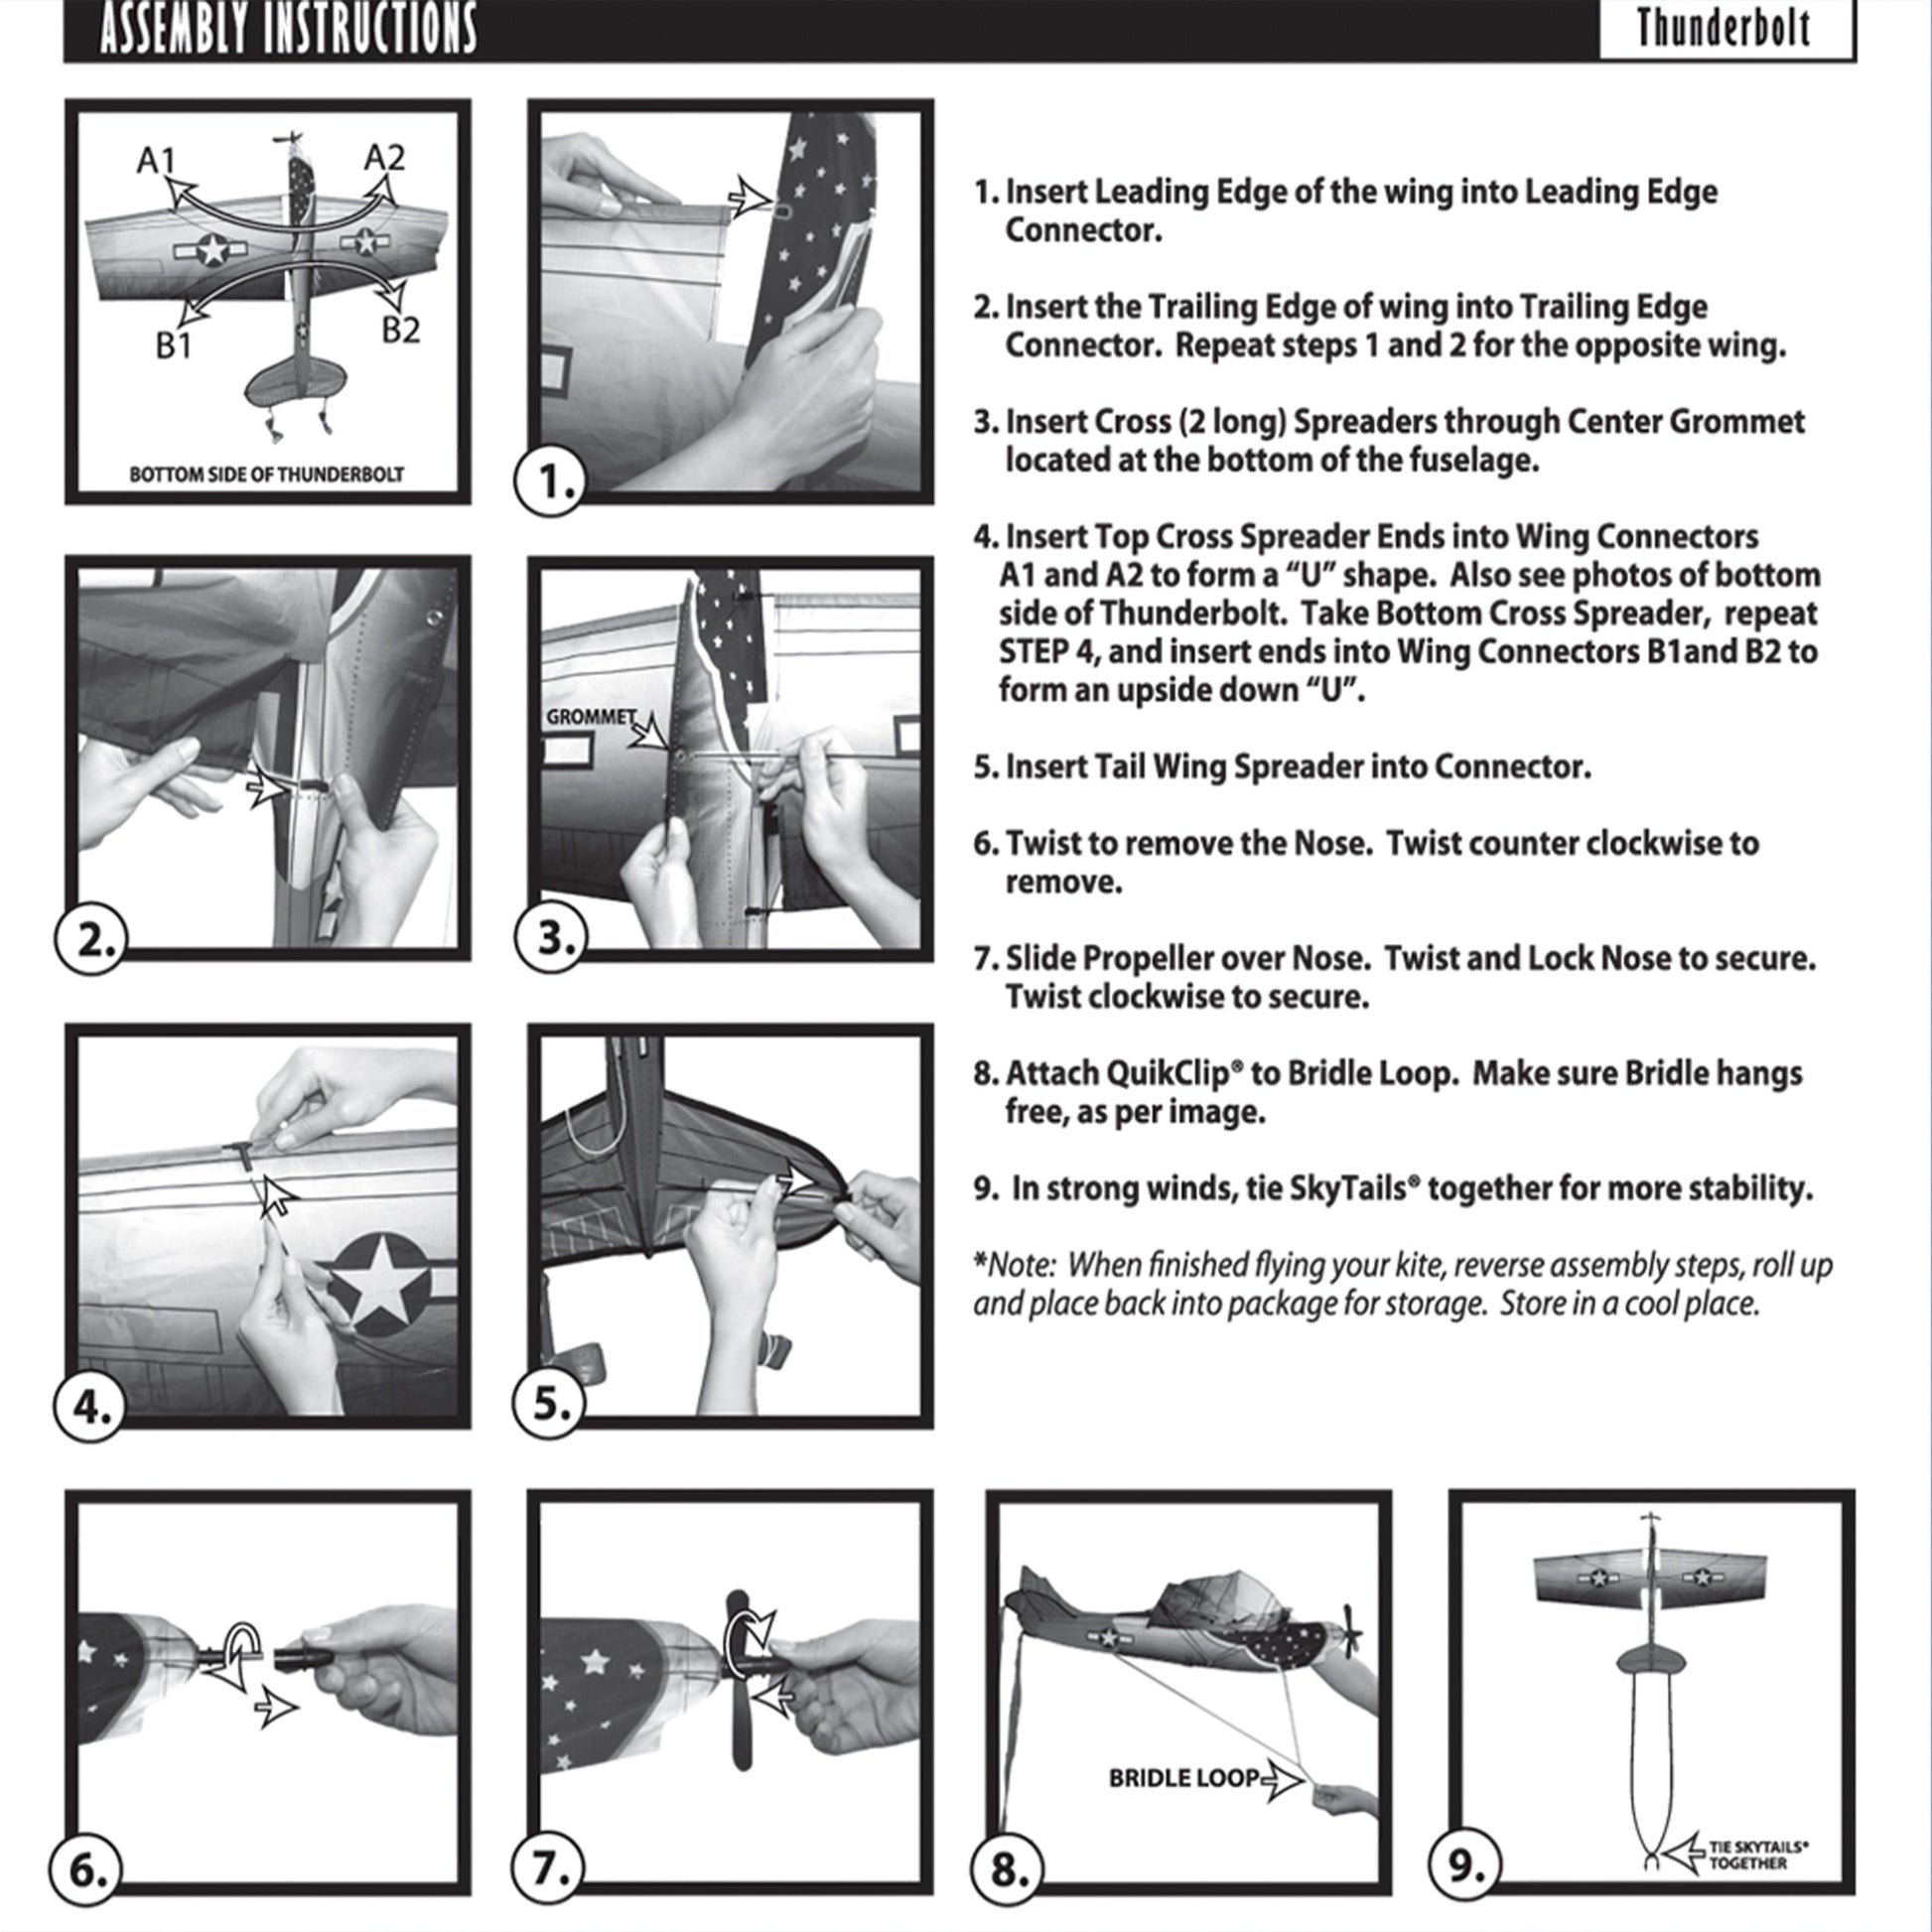 windnsun windforce thunderbolt 3d nylon kite assembly instructions